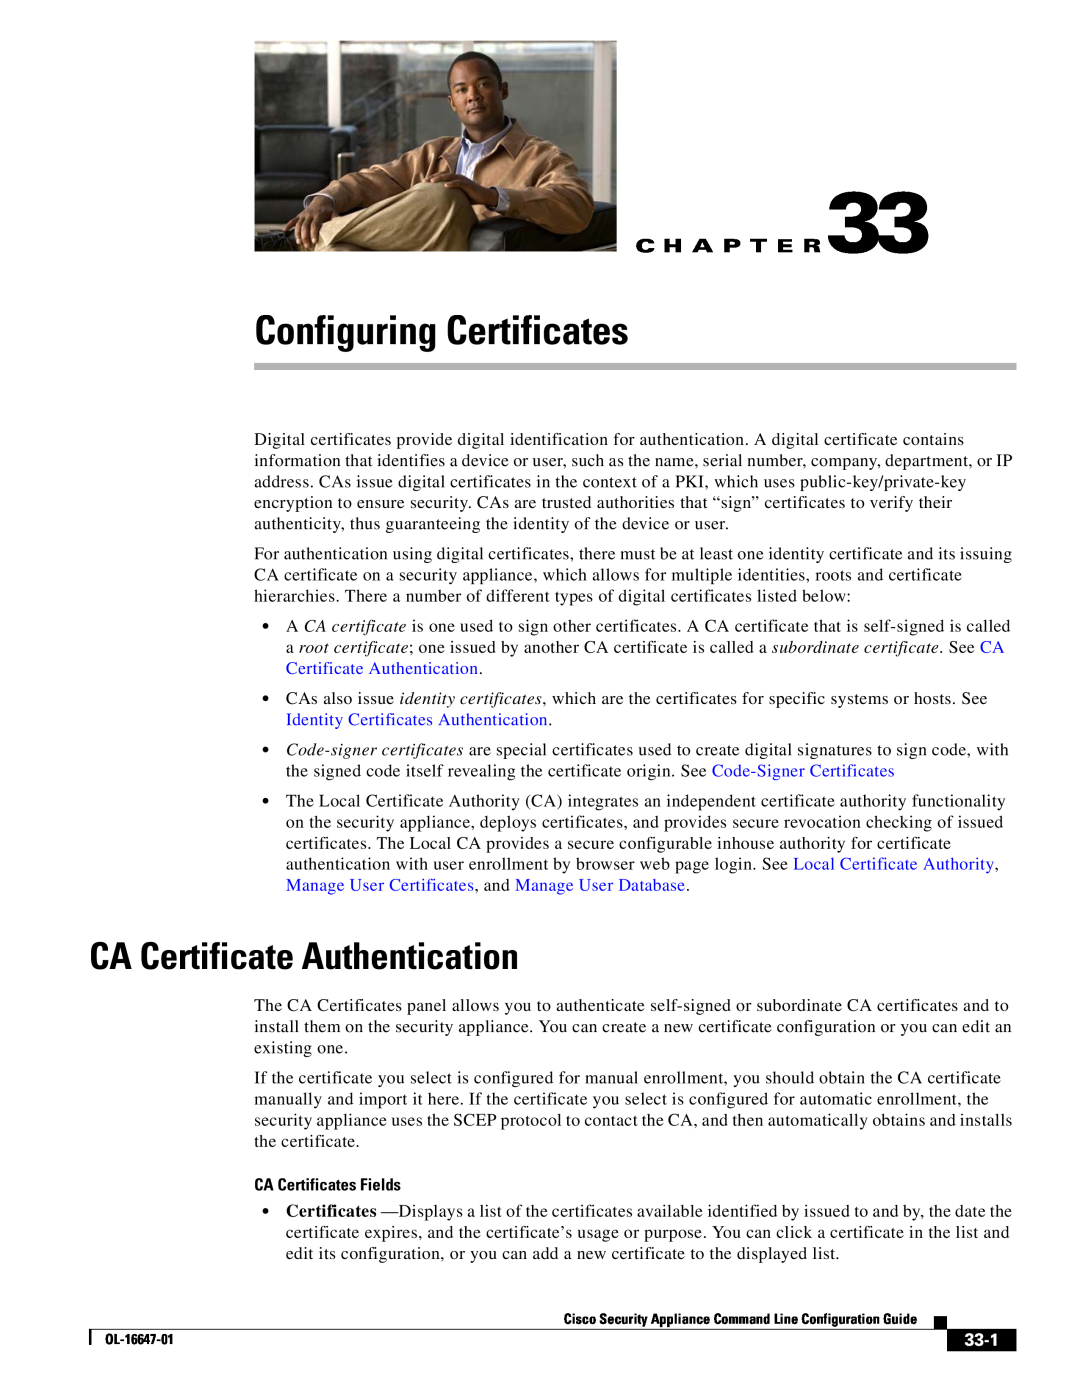 Cisco Systems OL-16647-01 manual CA Certificate Authentication, C H A P T E R, CA Certificates Fields, 33-1 